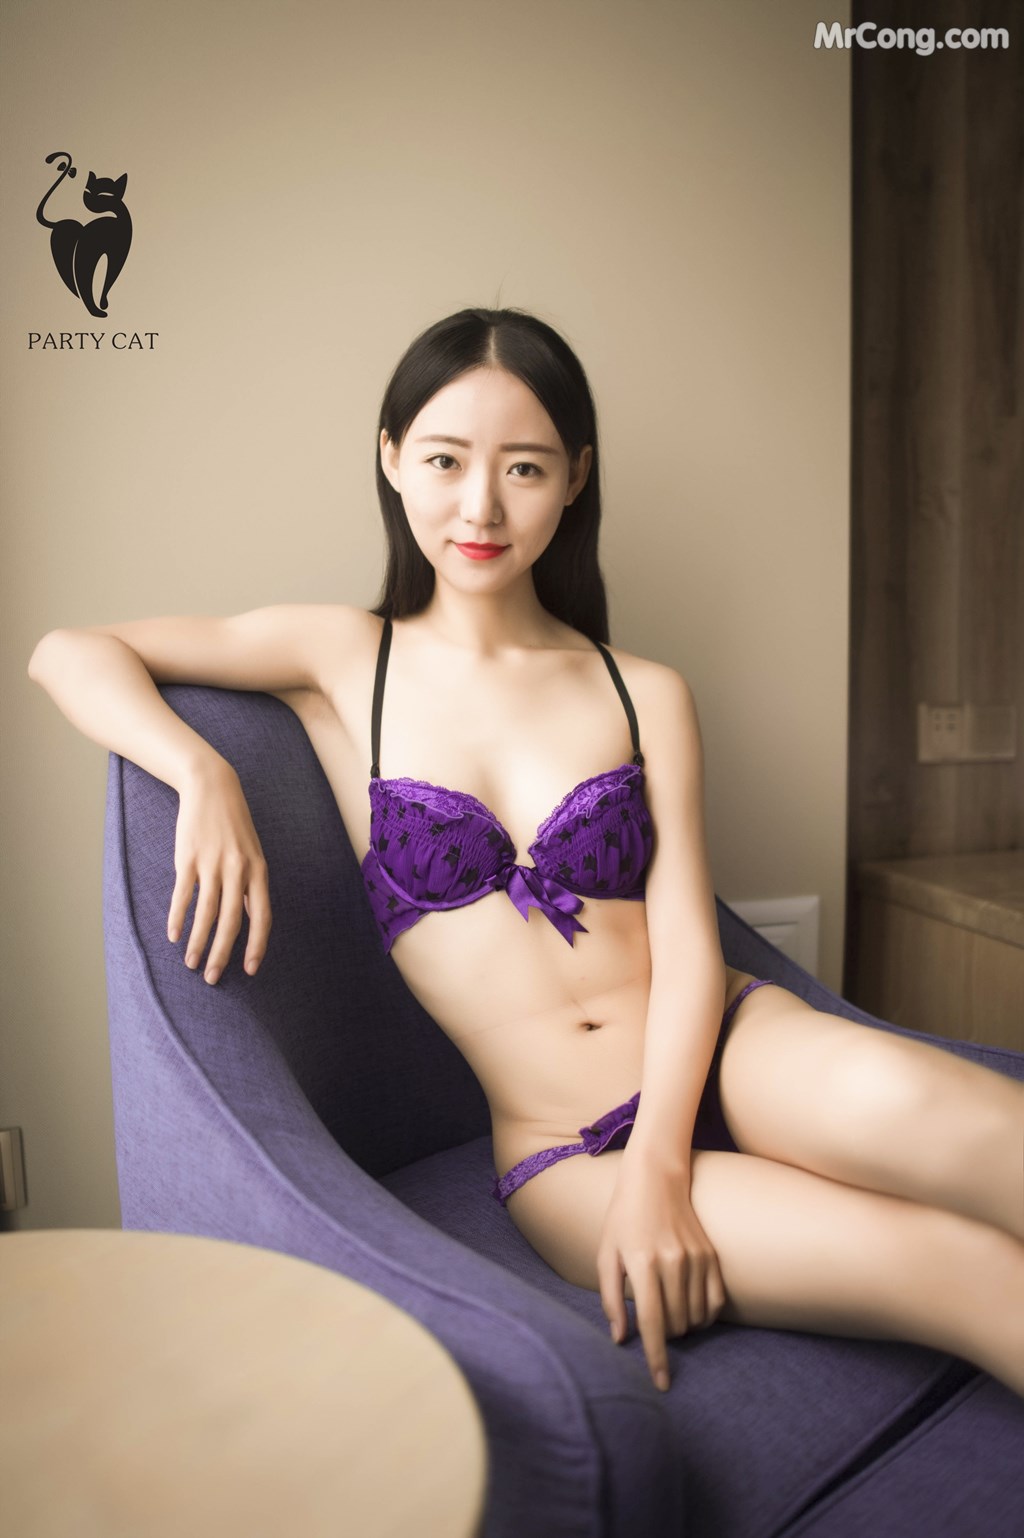 PartyCat Vol.011: Model Qian Qian (倩倩) (46 photos) photo 1-14